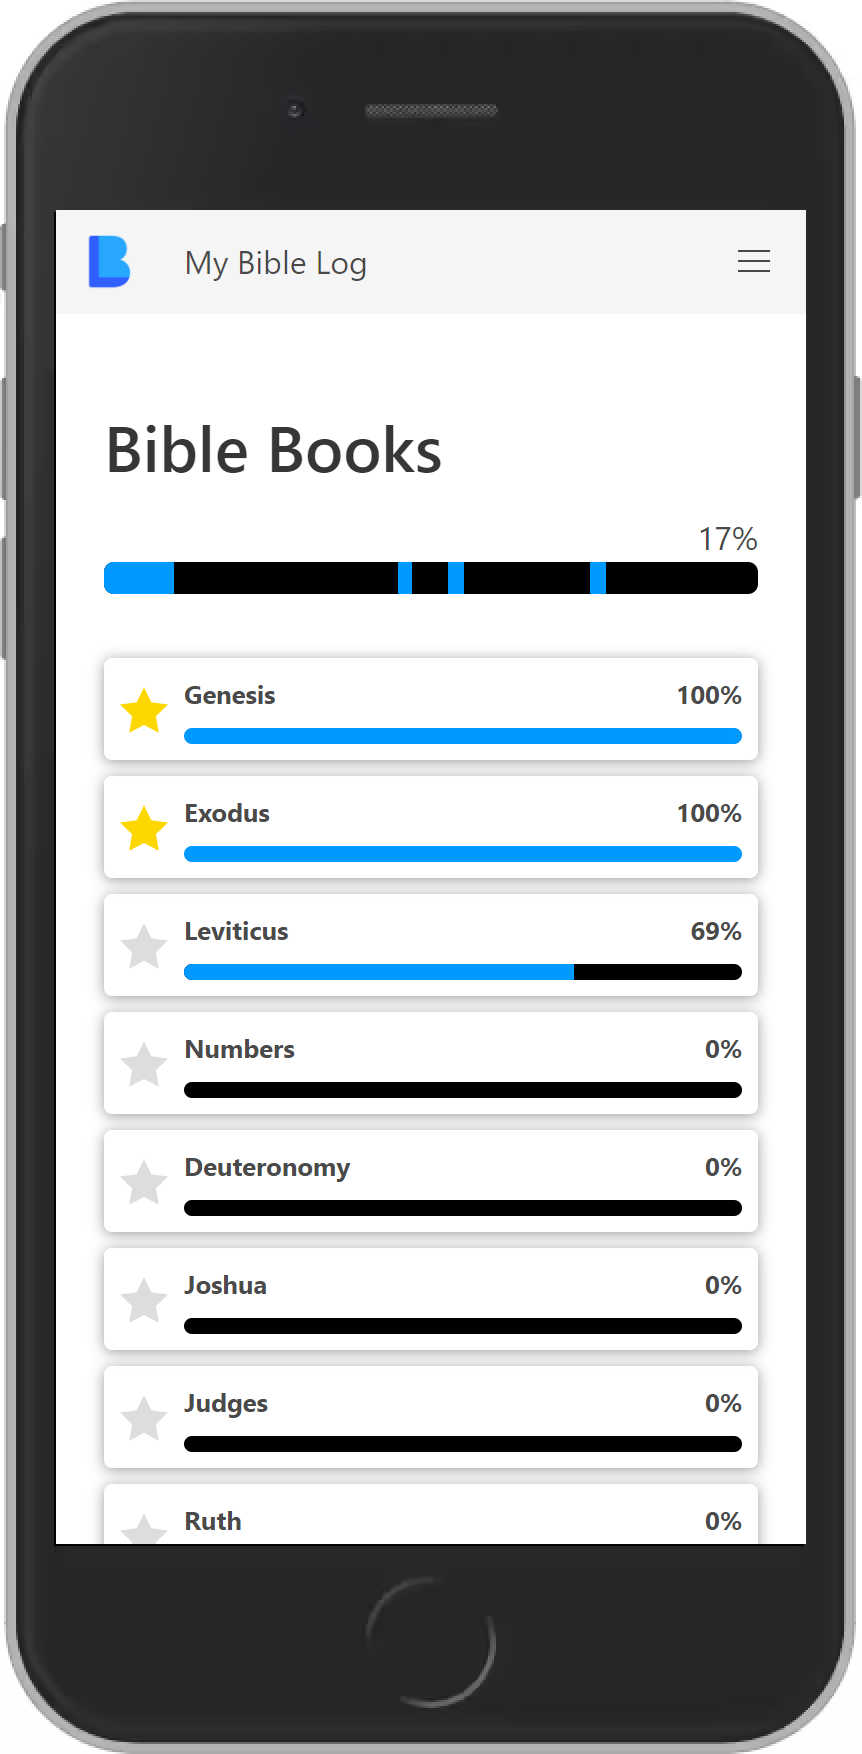 My Bible Log Bible Books Page Screenshot